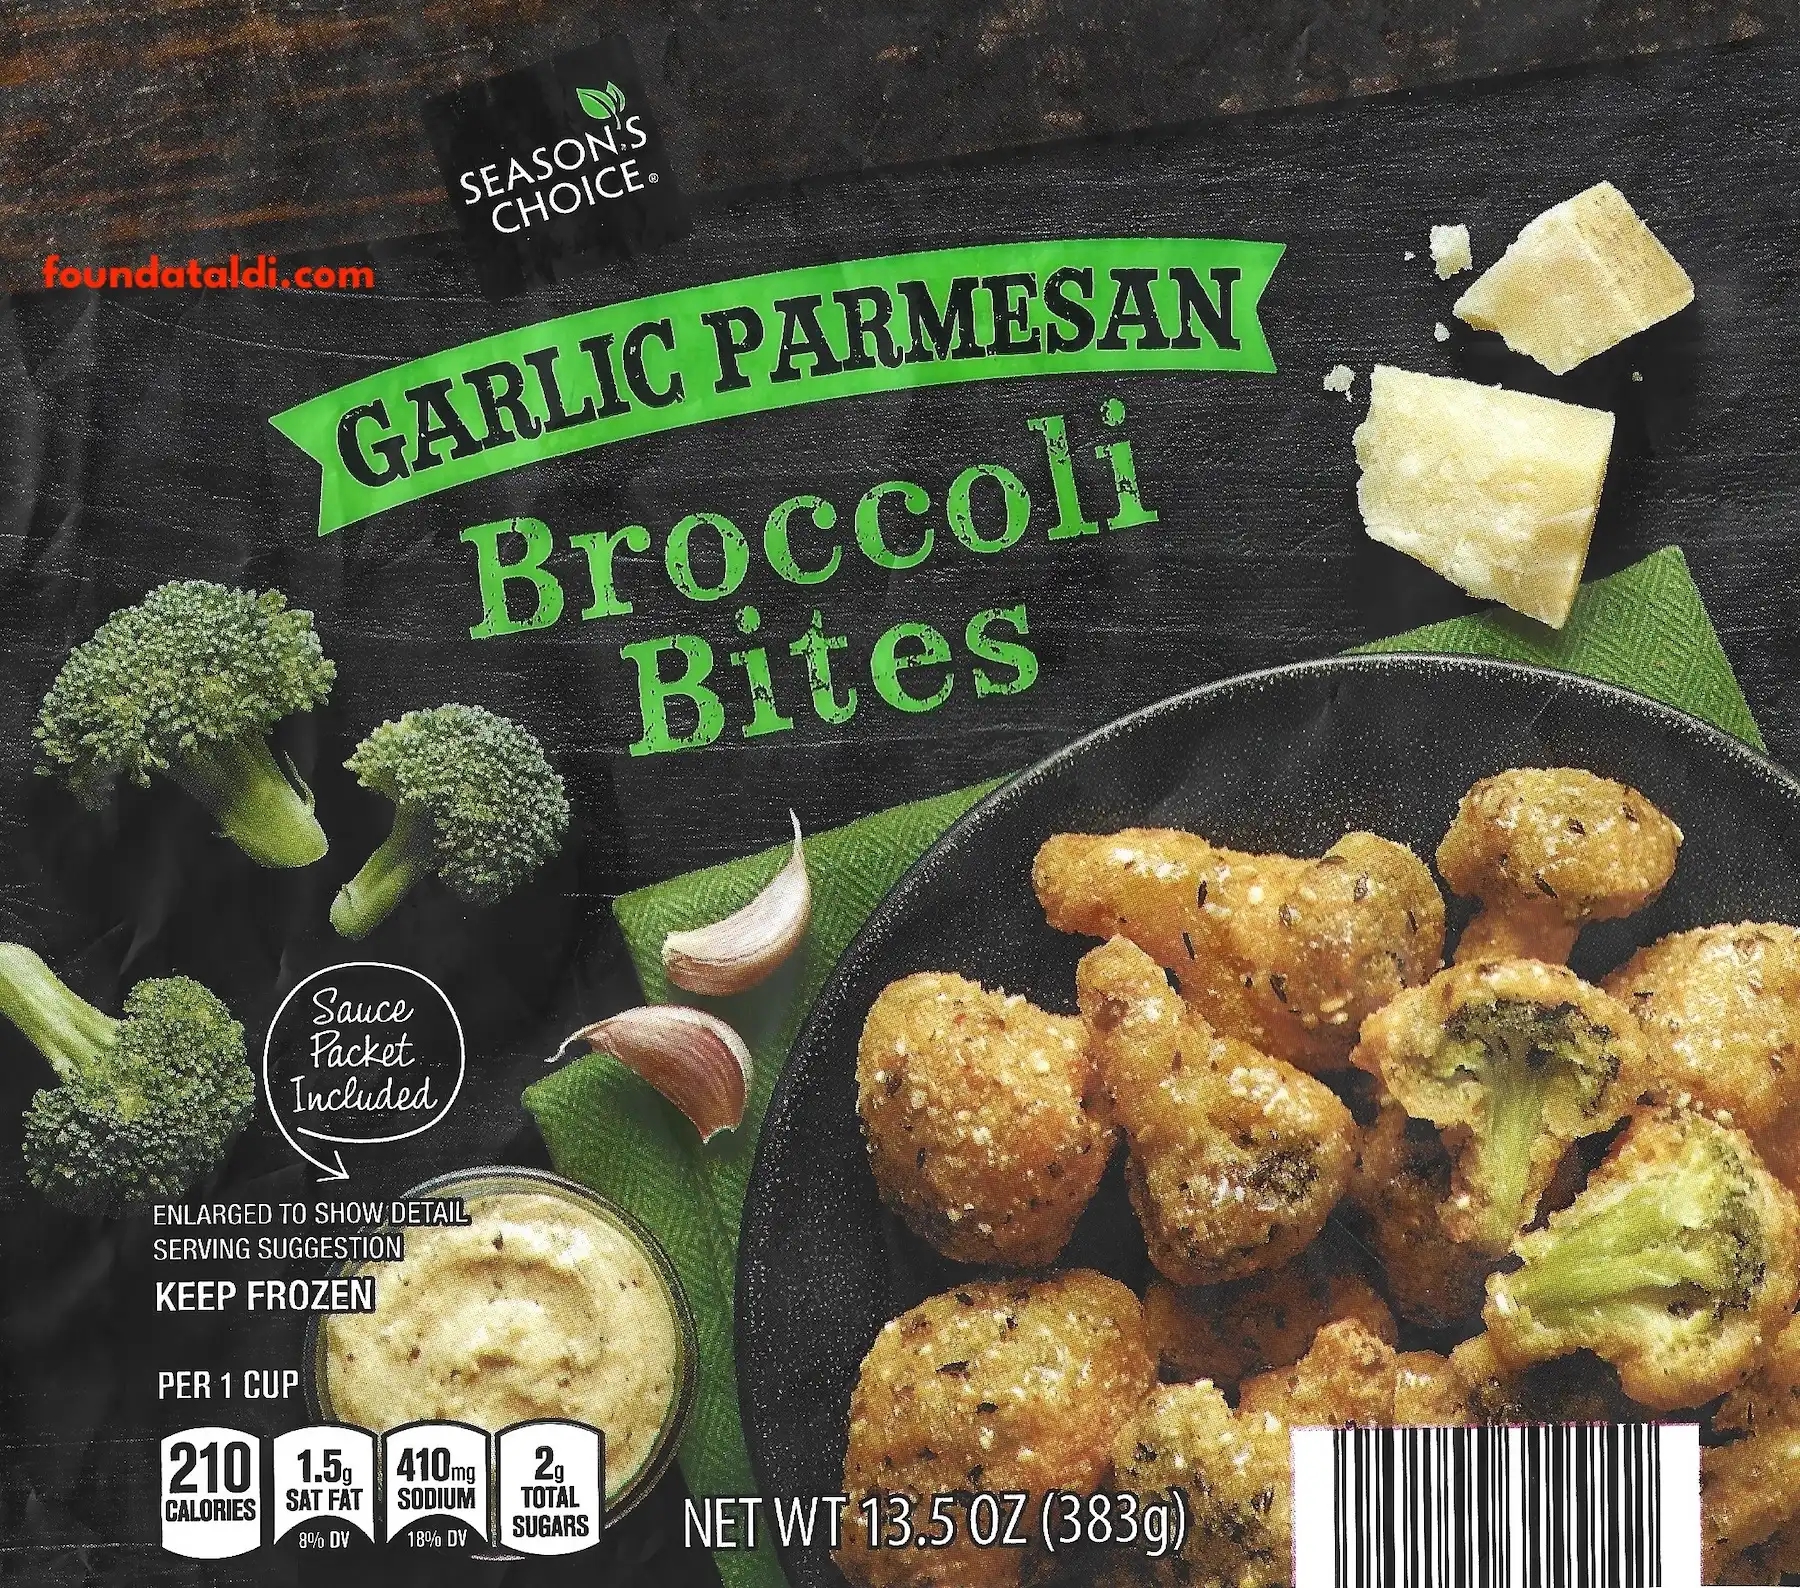 Season's Choice Garlic Parmesan Broccoli Bites